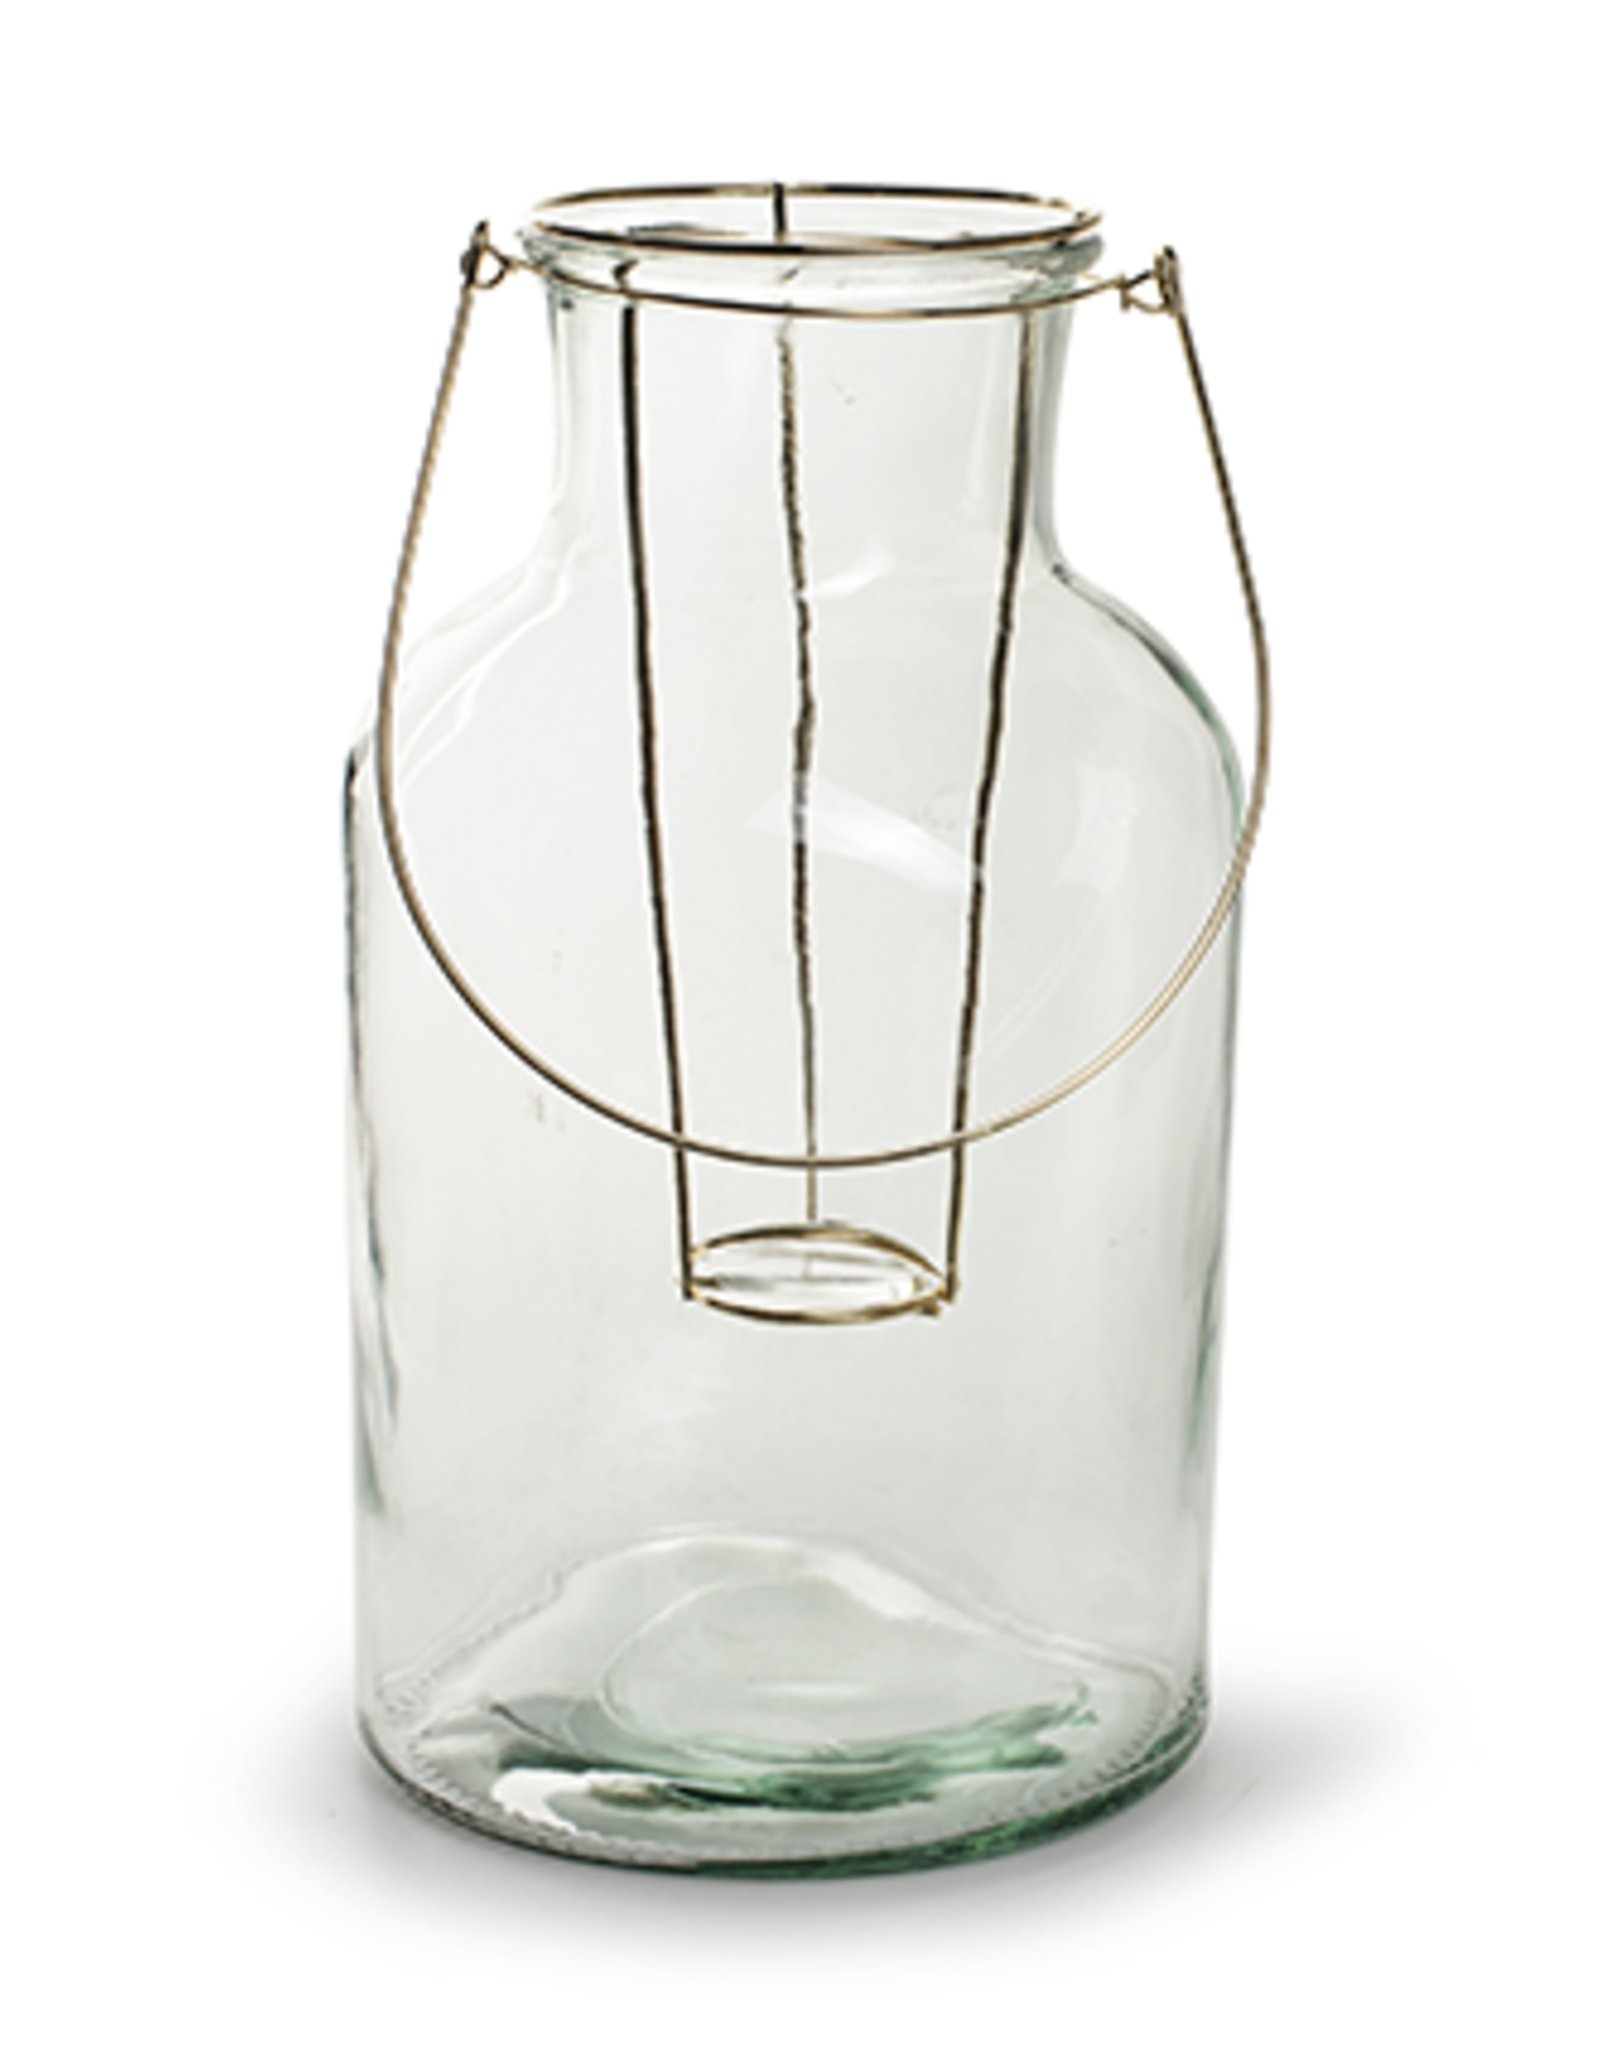 Vase with Hanger Buenos